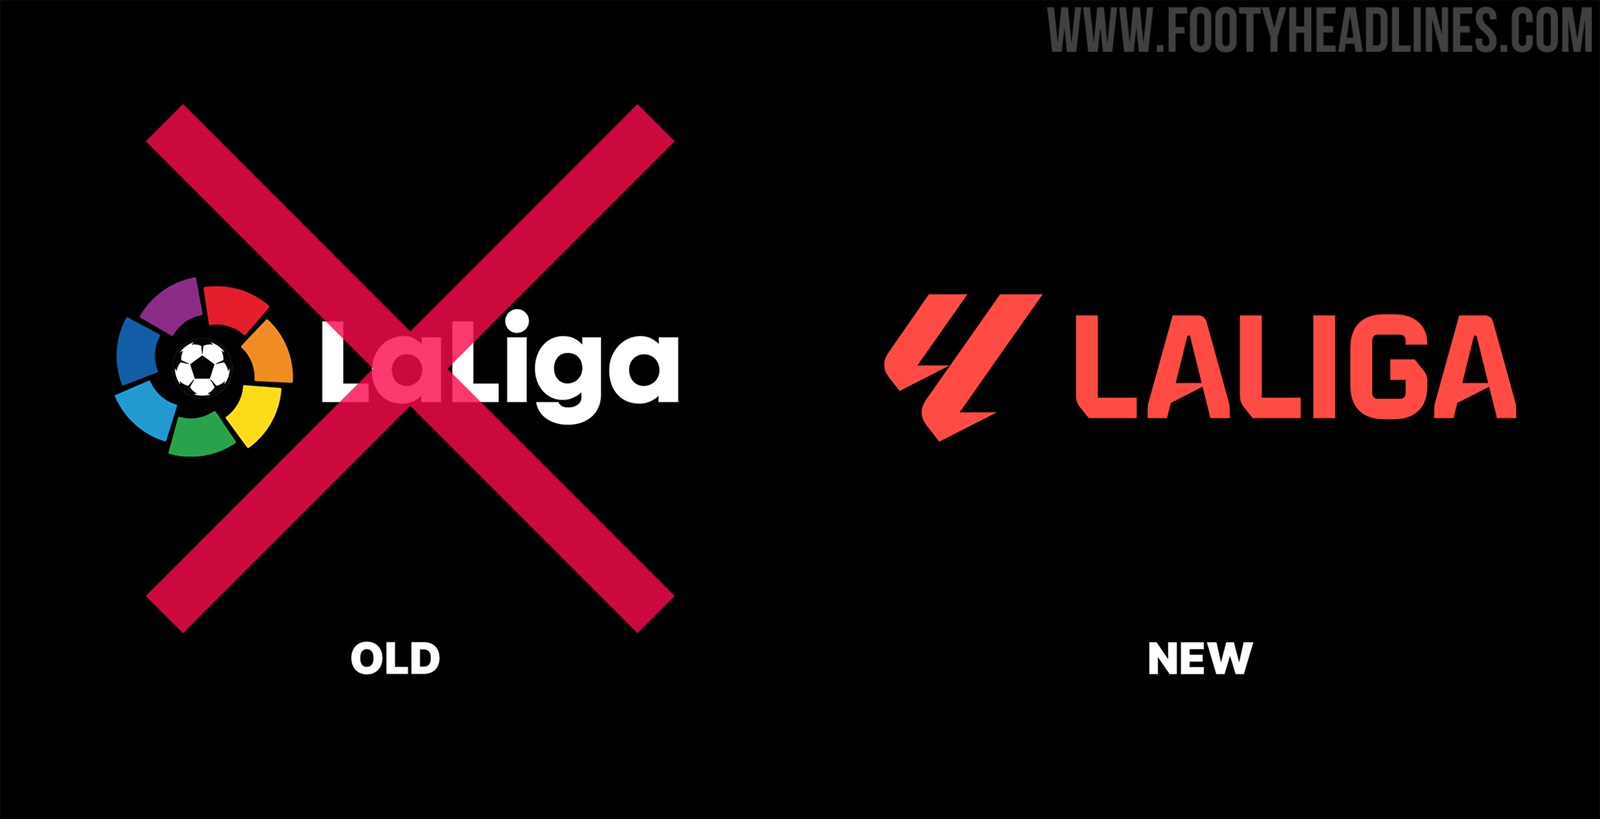 All-New La Liga Logo Released - Footy Headlines